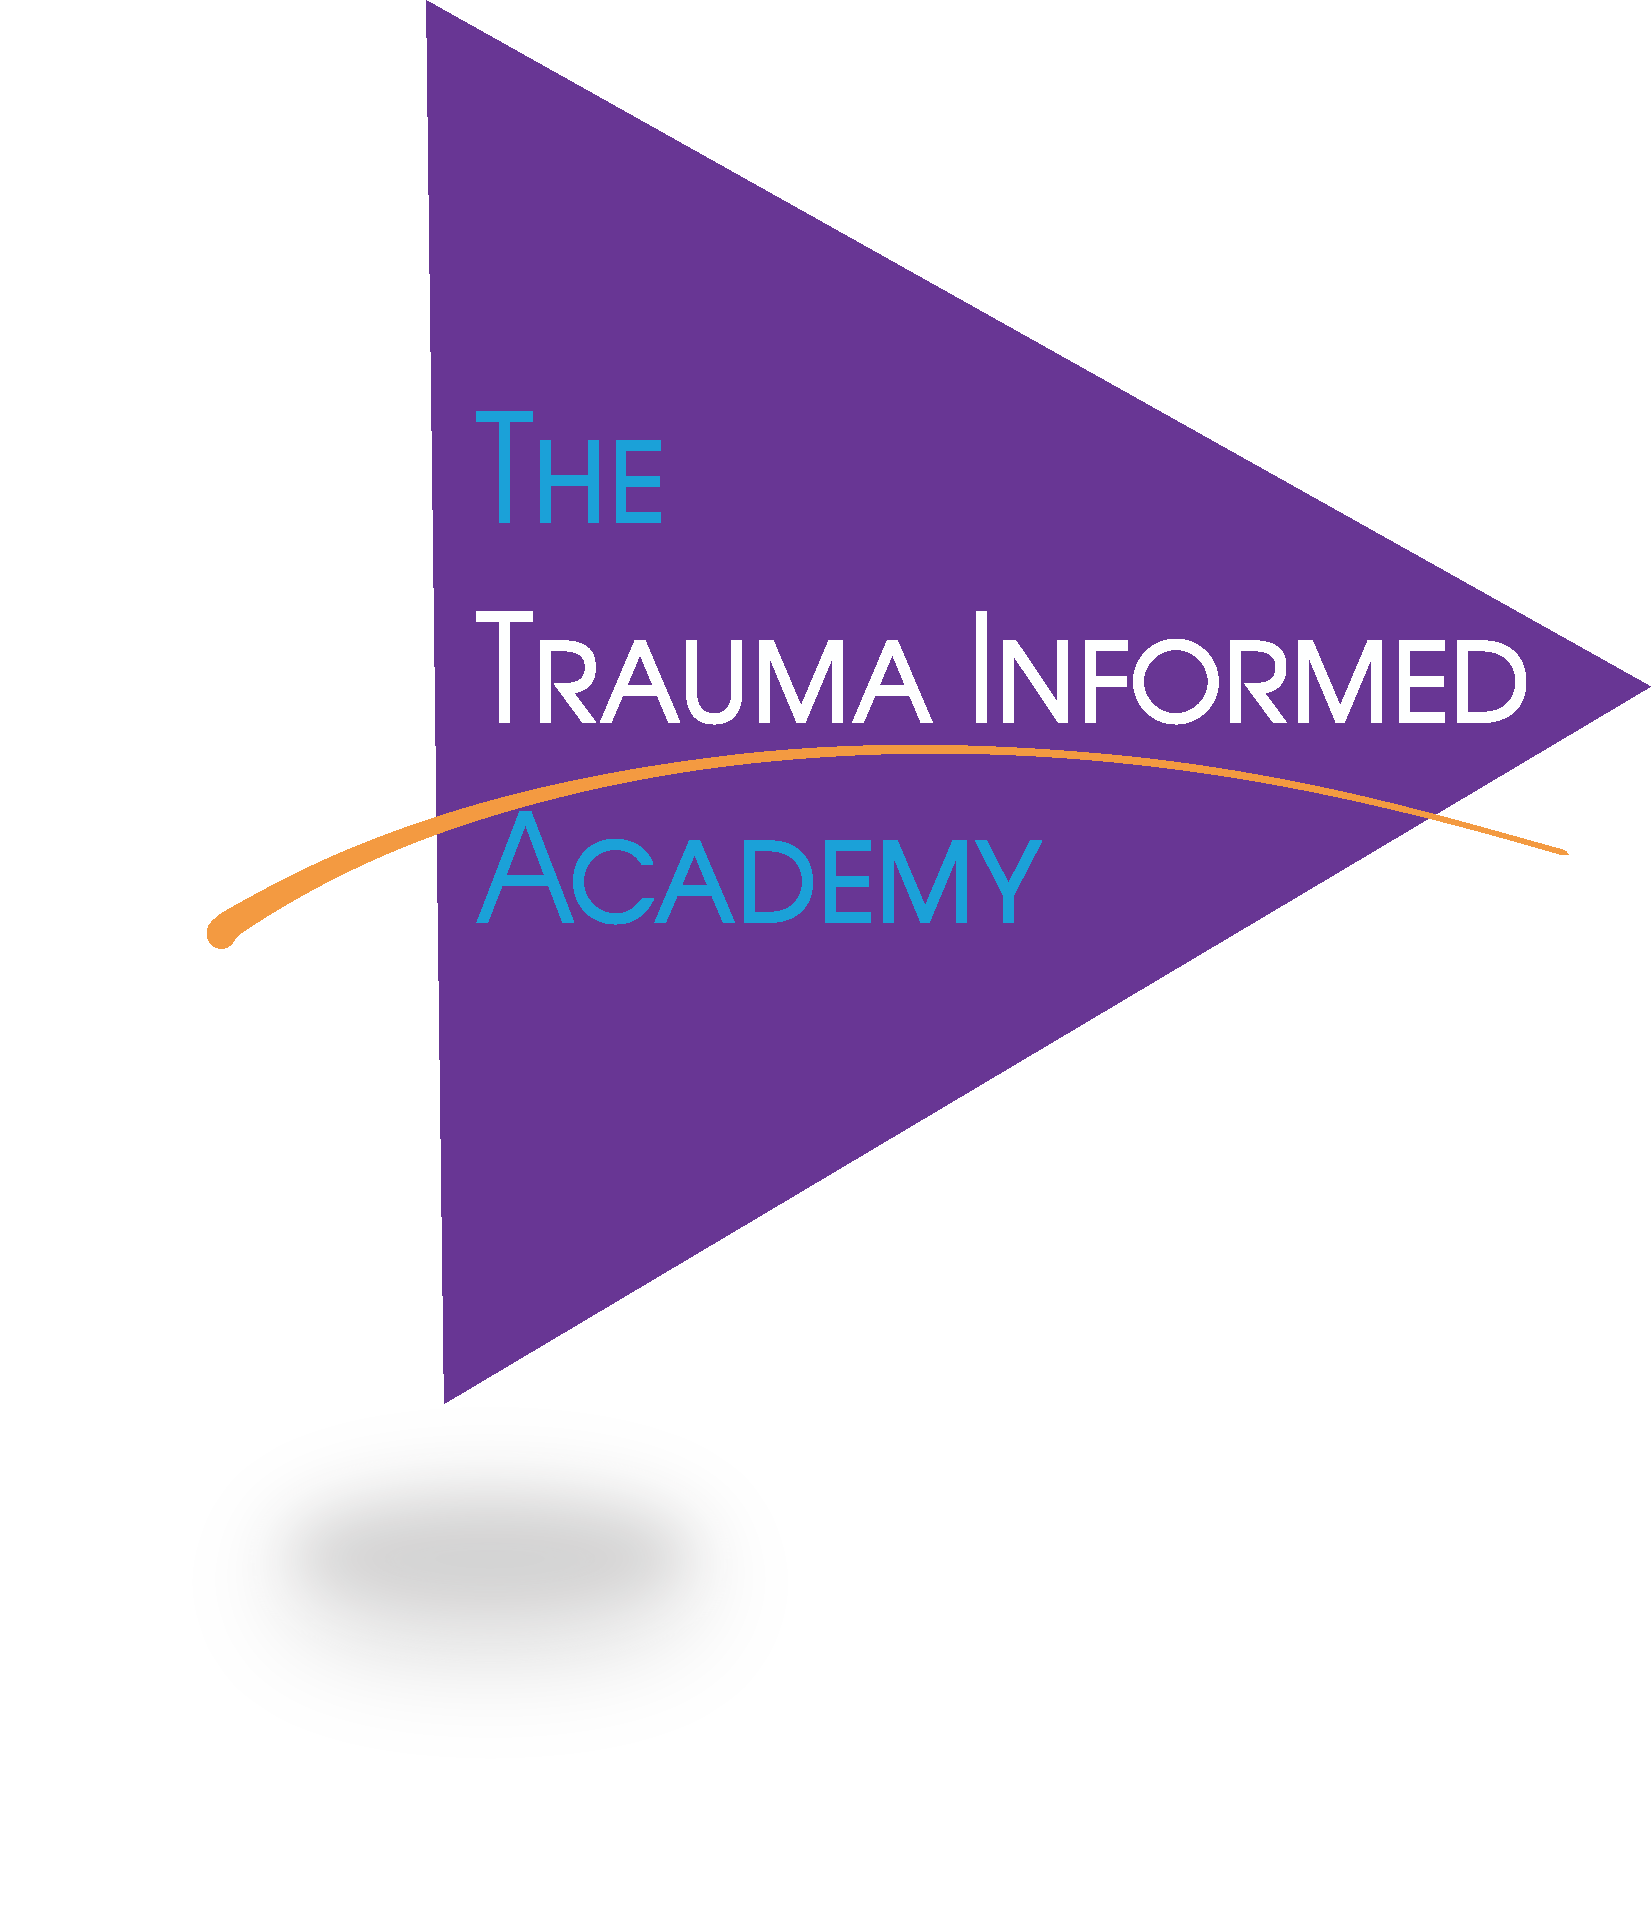 https://tinyurl.com/elizabethpower, Founder, The Trauma Informed Academy at EPower & Associates, Inc.